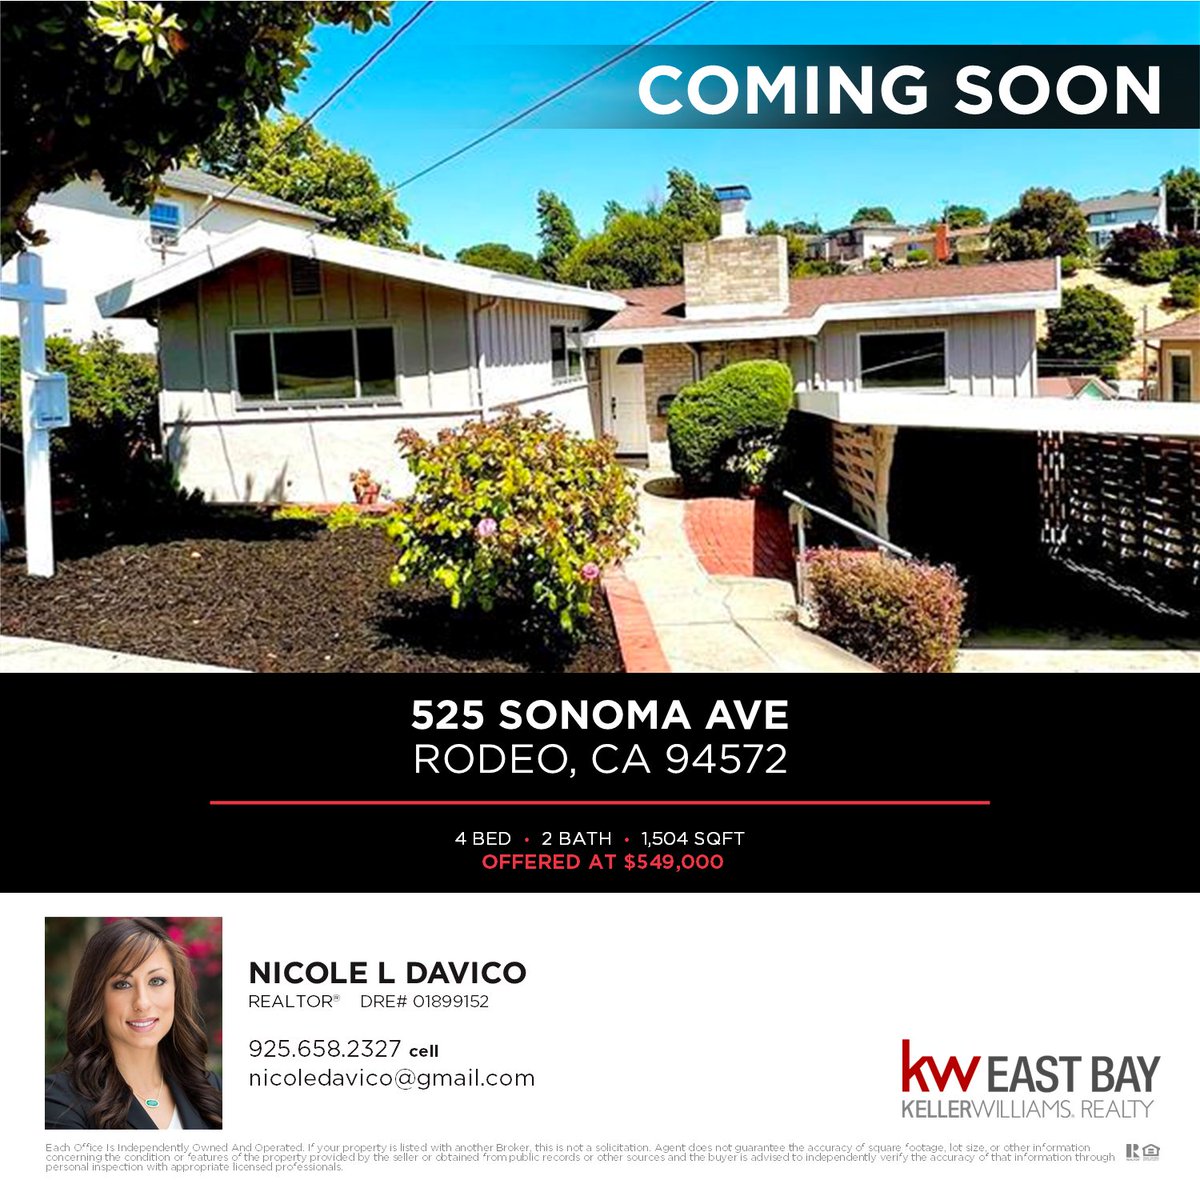 Coming soon!
A new listing by Nicole L DaVico, 525 Sonoma Ave
#kellerwilliams #bayarearealestate #bayarearealtor